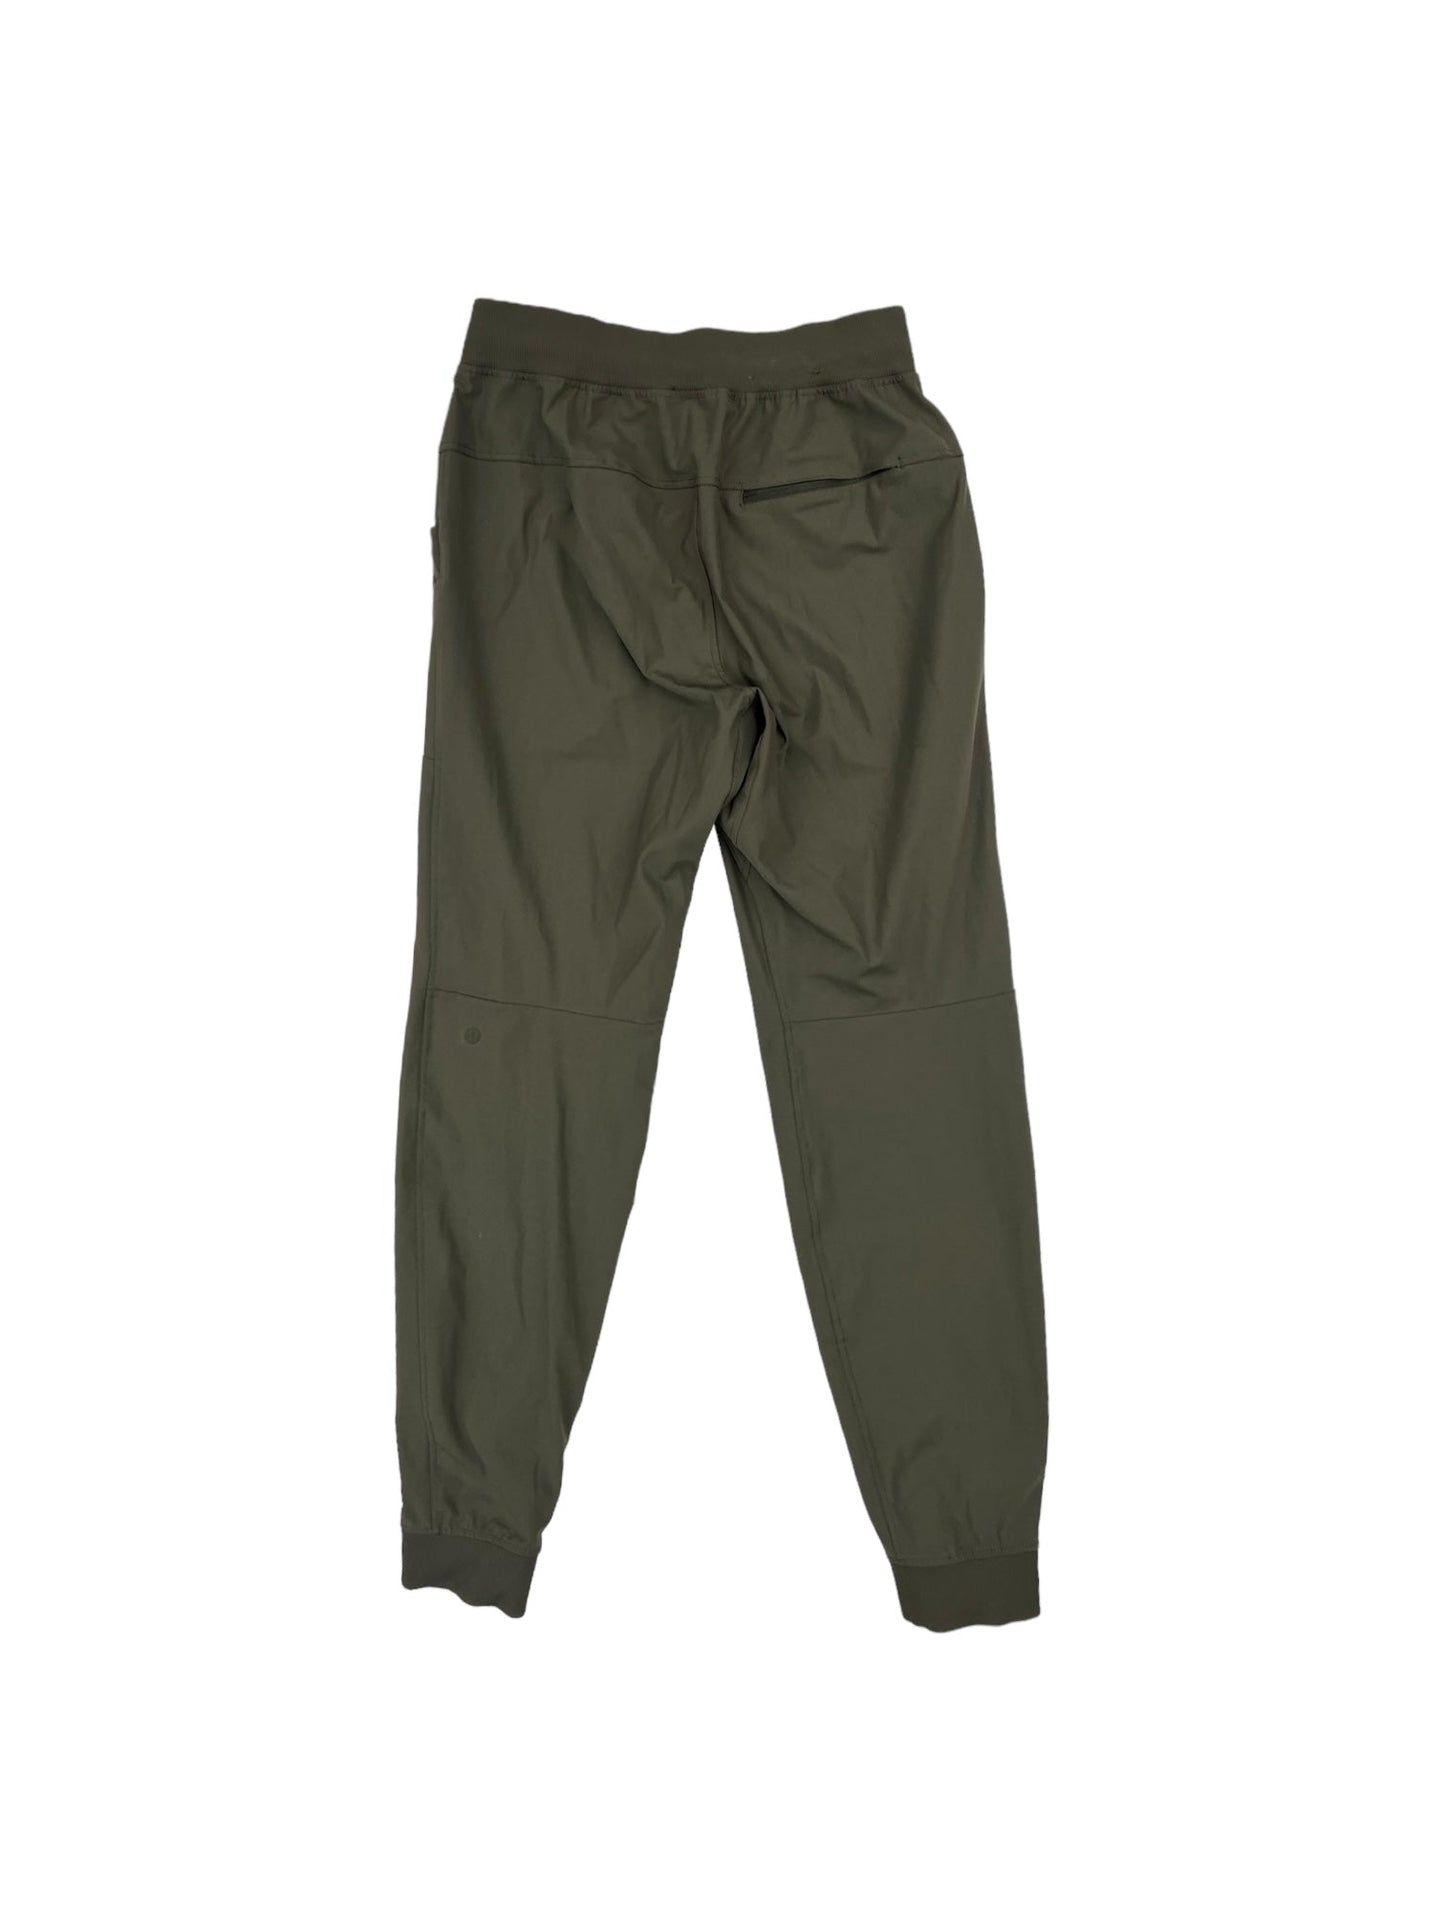 Green Athletic Pants Lululemon, Size S